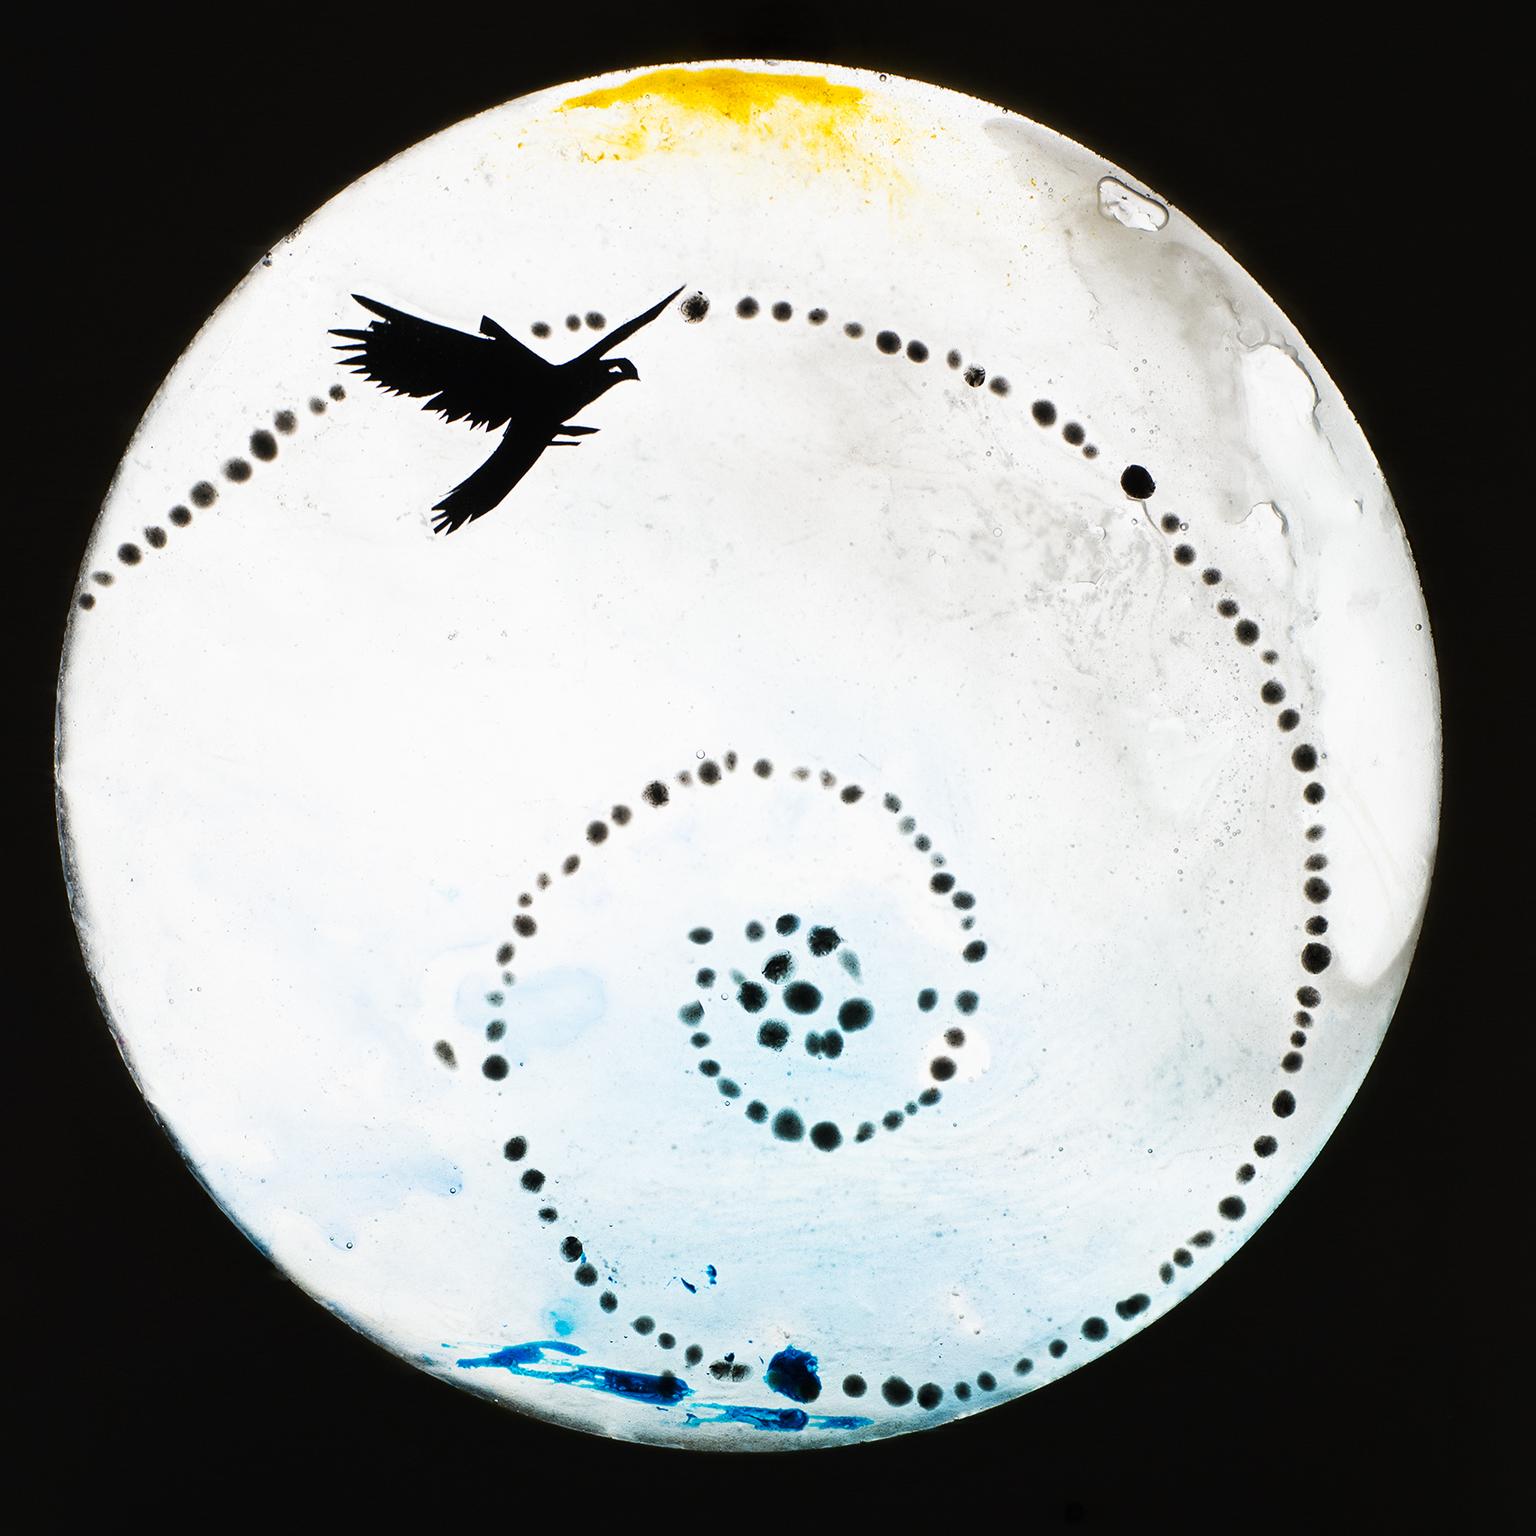 Image for entry 'Equiangular Falcon's Flight'